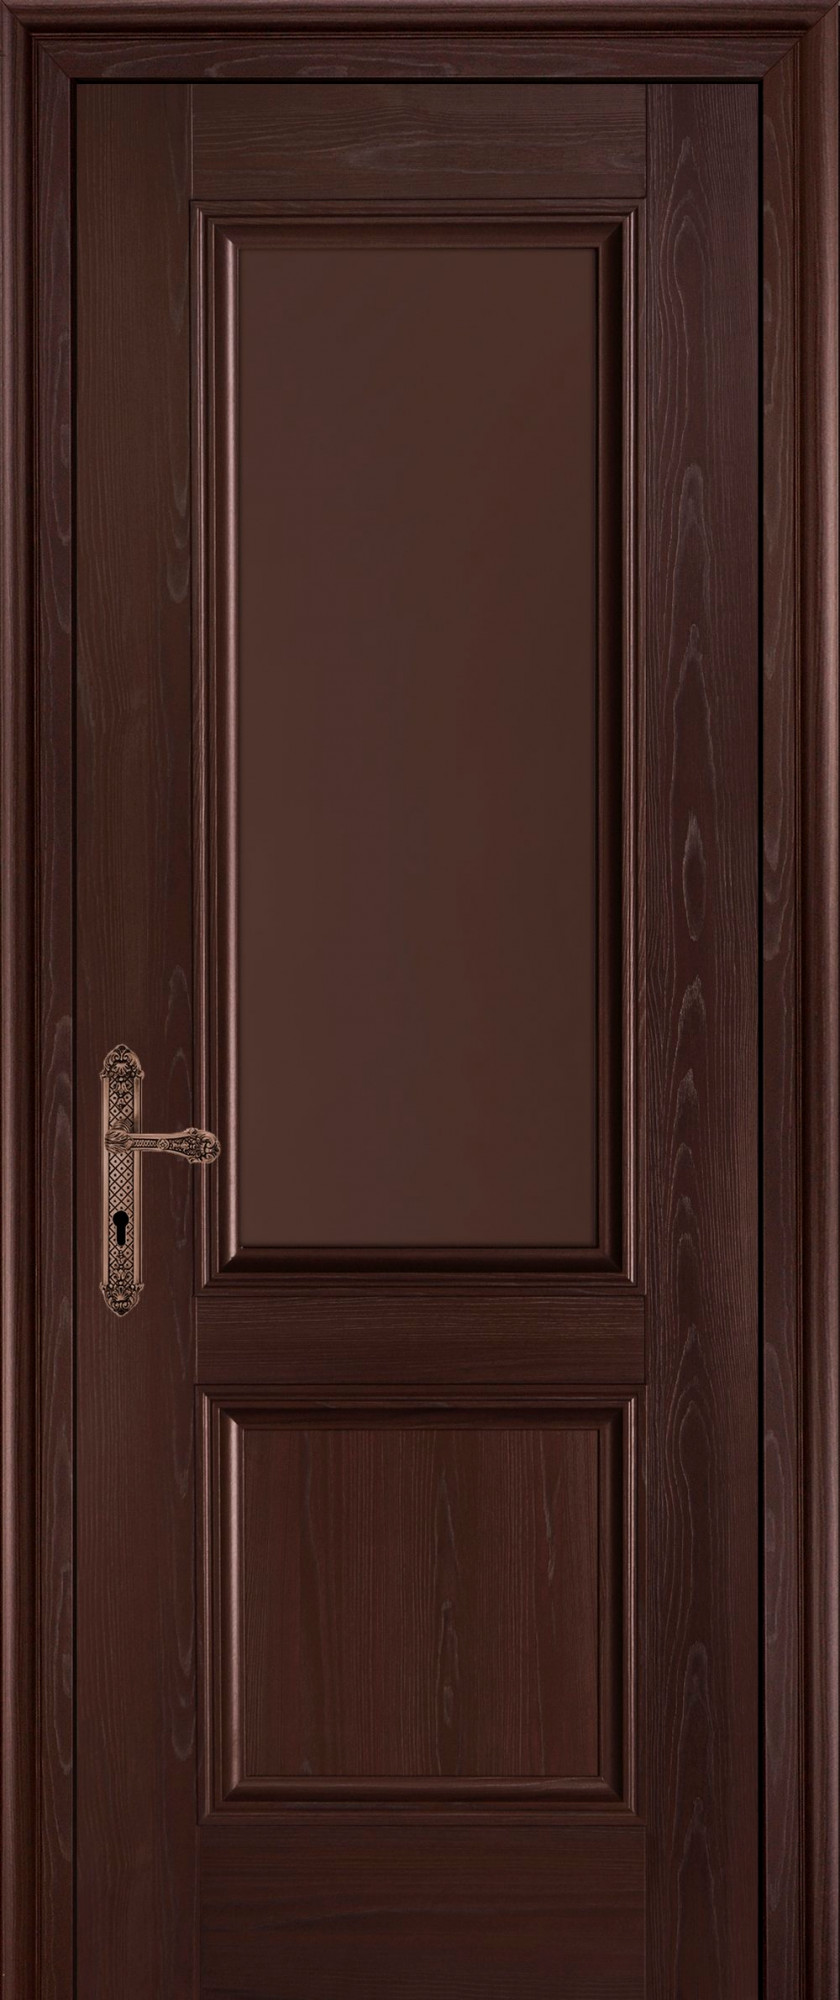 Door Wood Stain Hardwood House Brown PNG